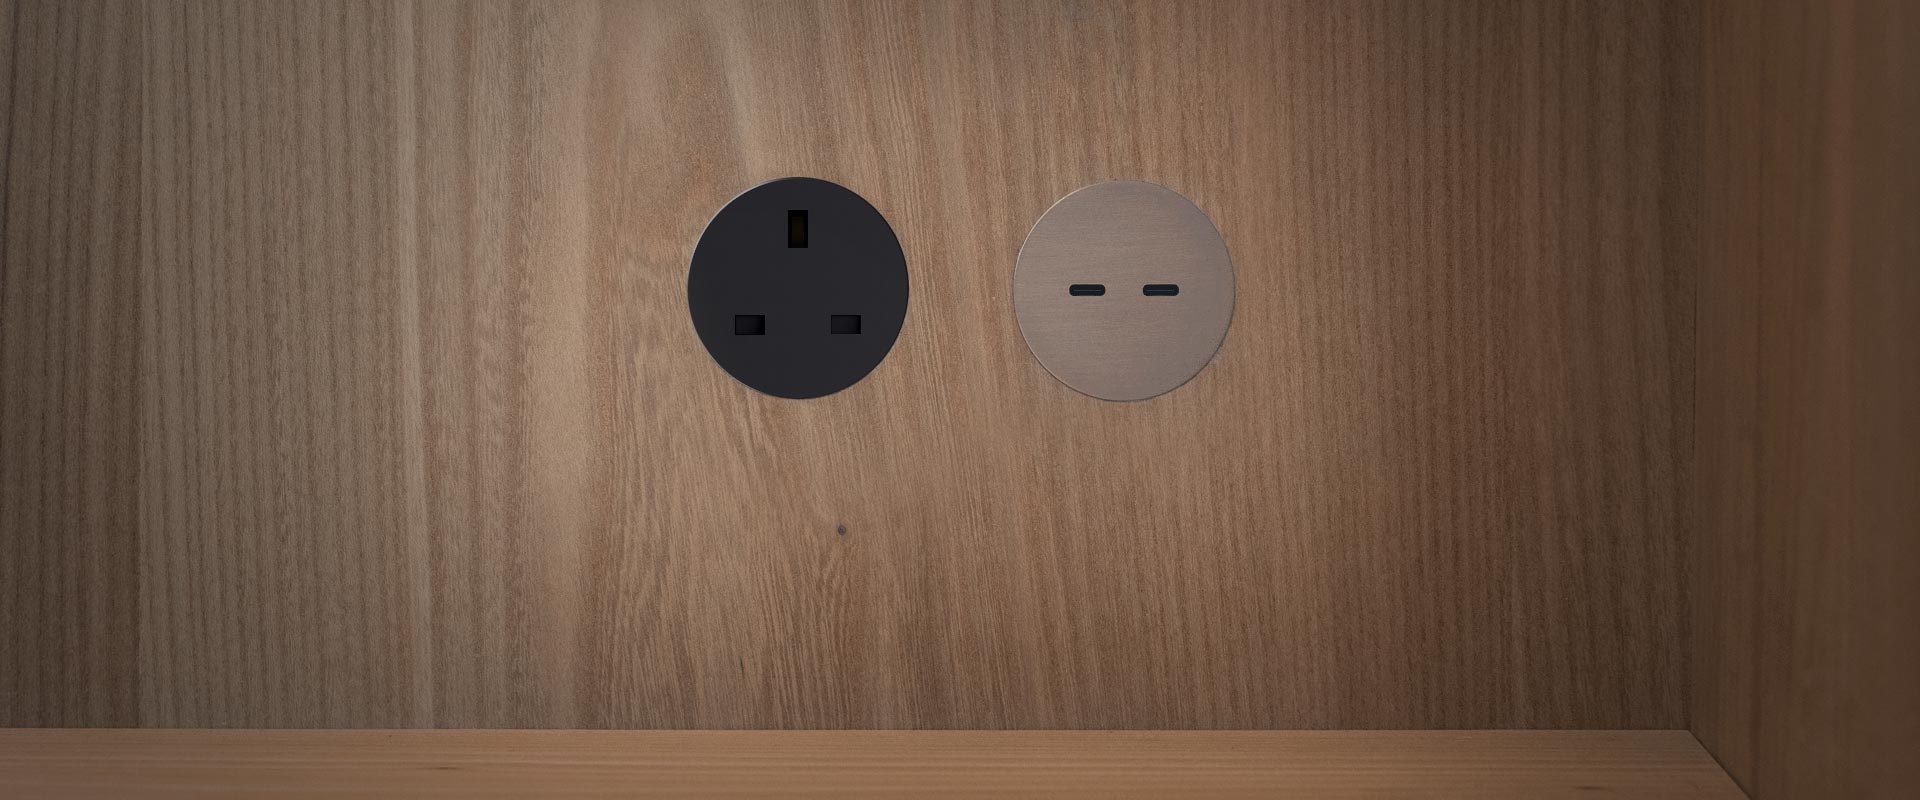 Rond round switchless UK power socket in matt black & bronze USB socket installed into a wooden cupboard